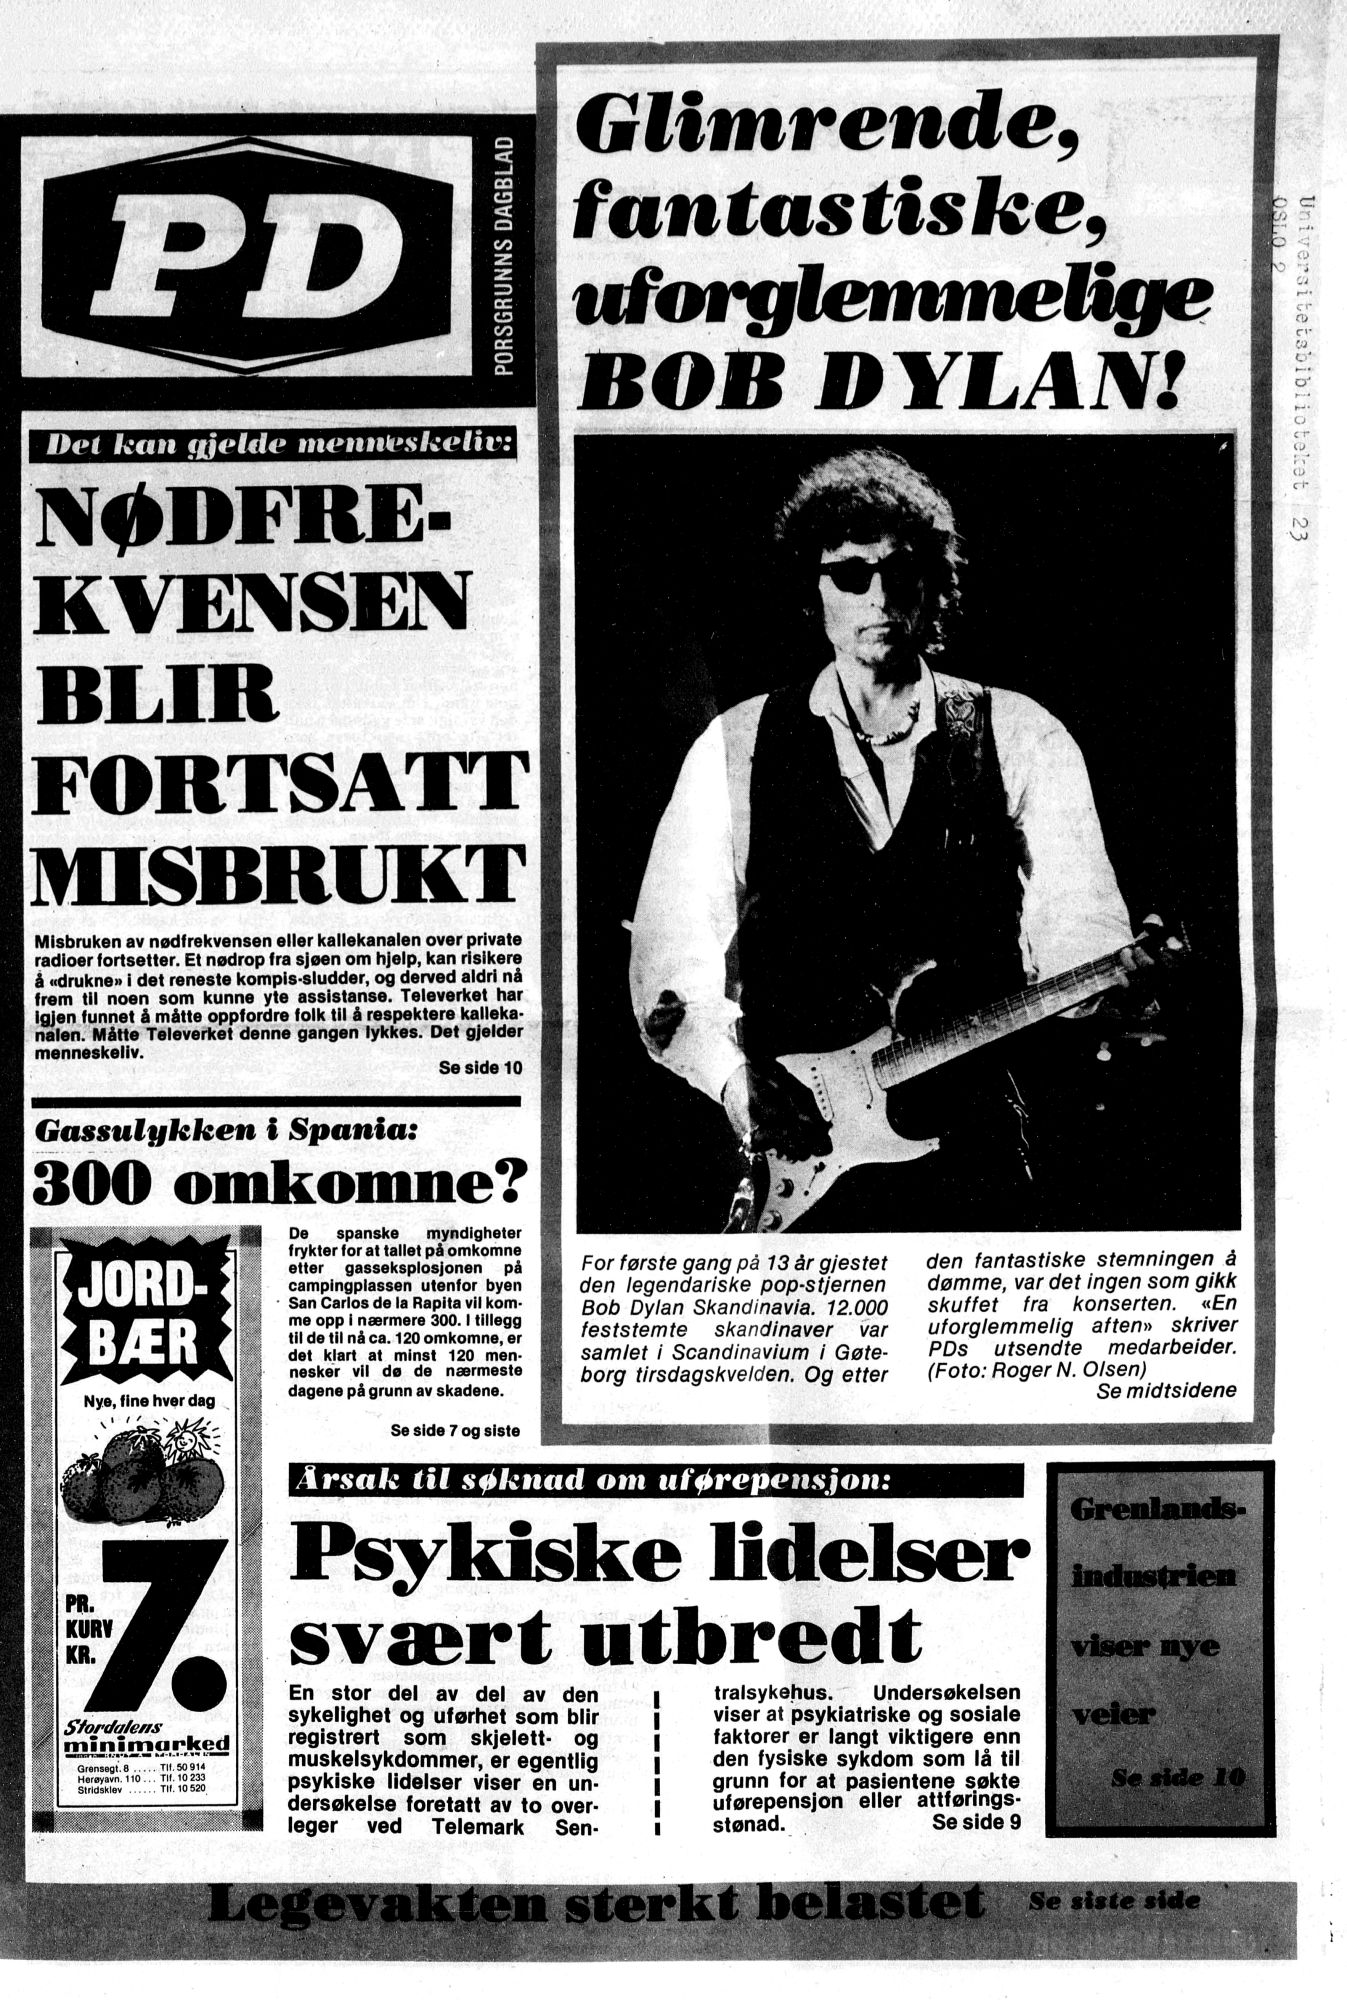 fremtiden-1-november-2014 Bob Dylan cover story